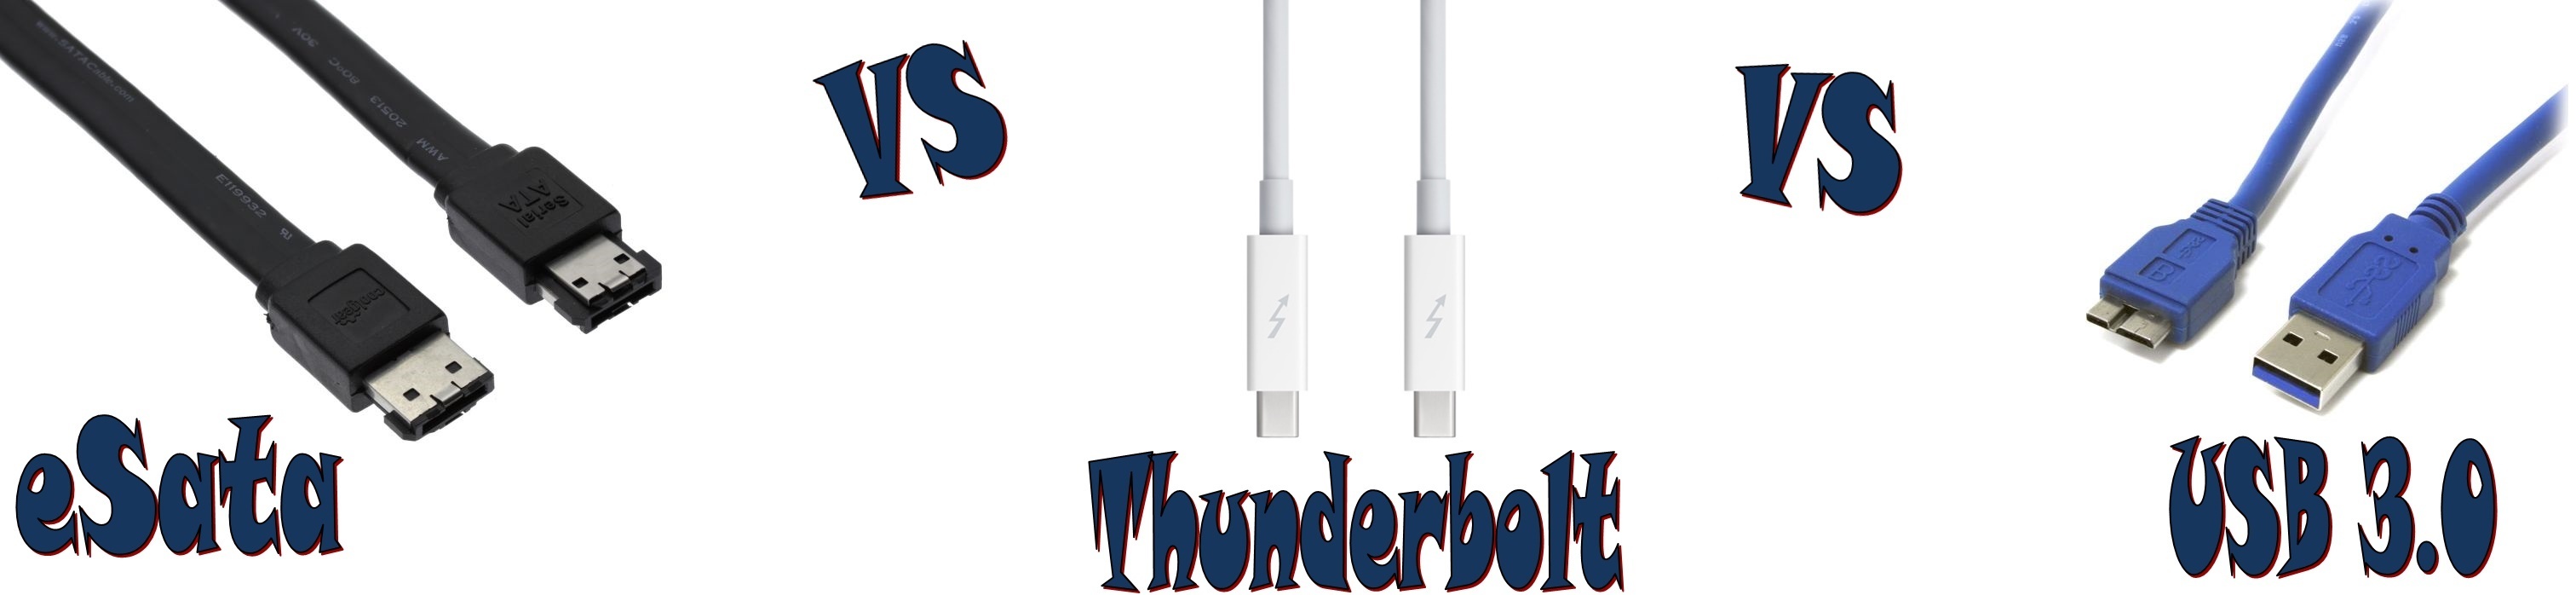 esata vs thunderbolt vs ubs 3.0